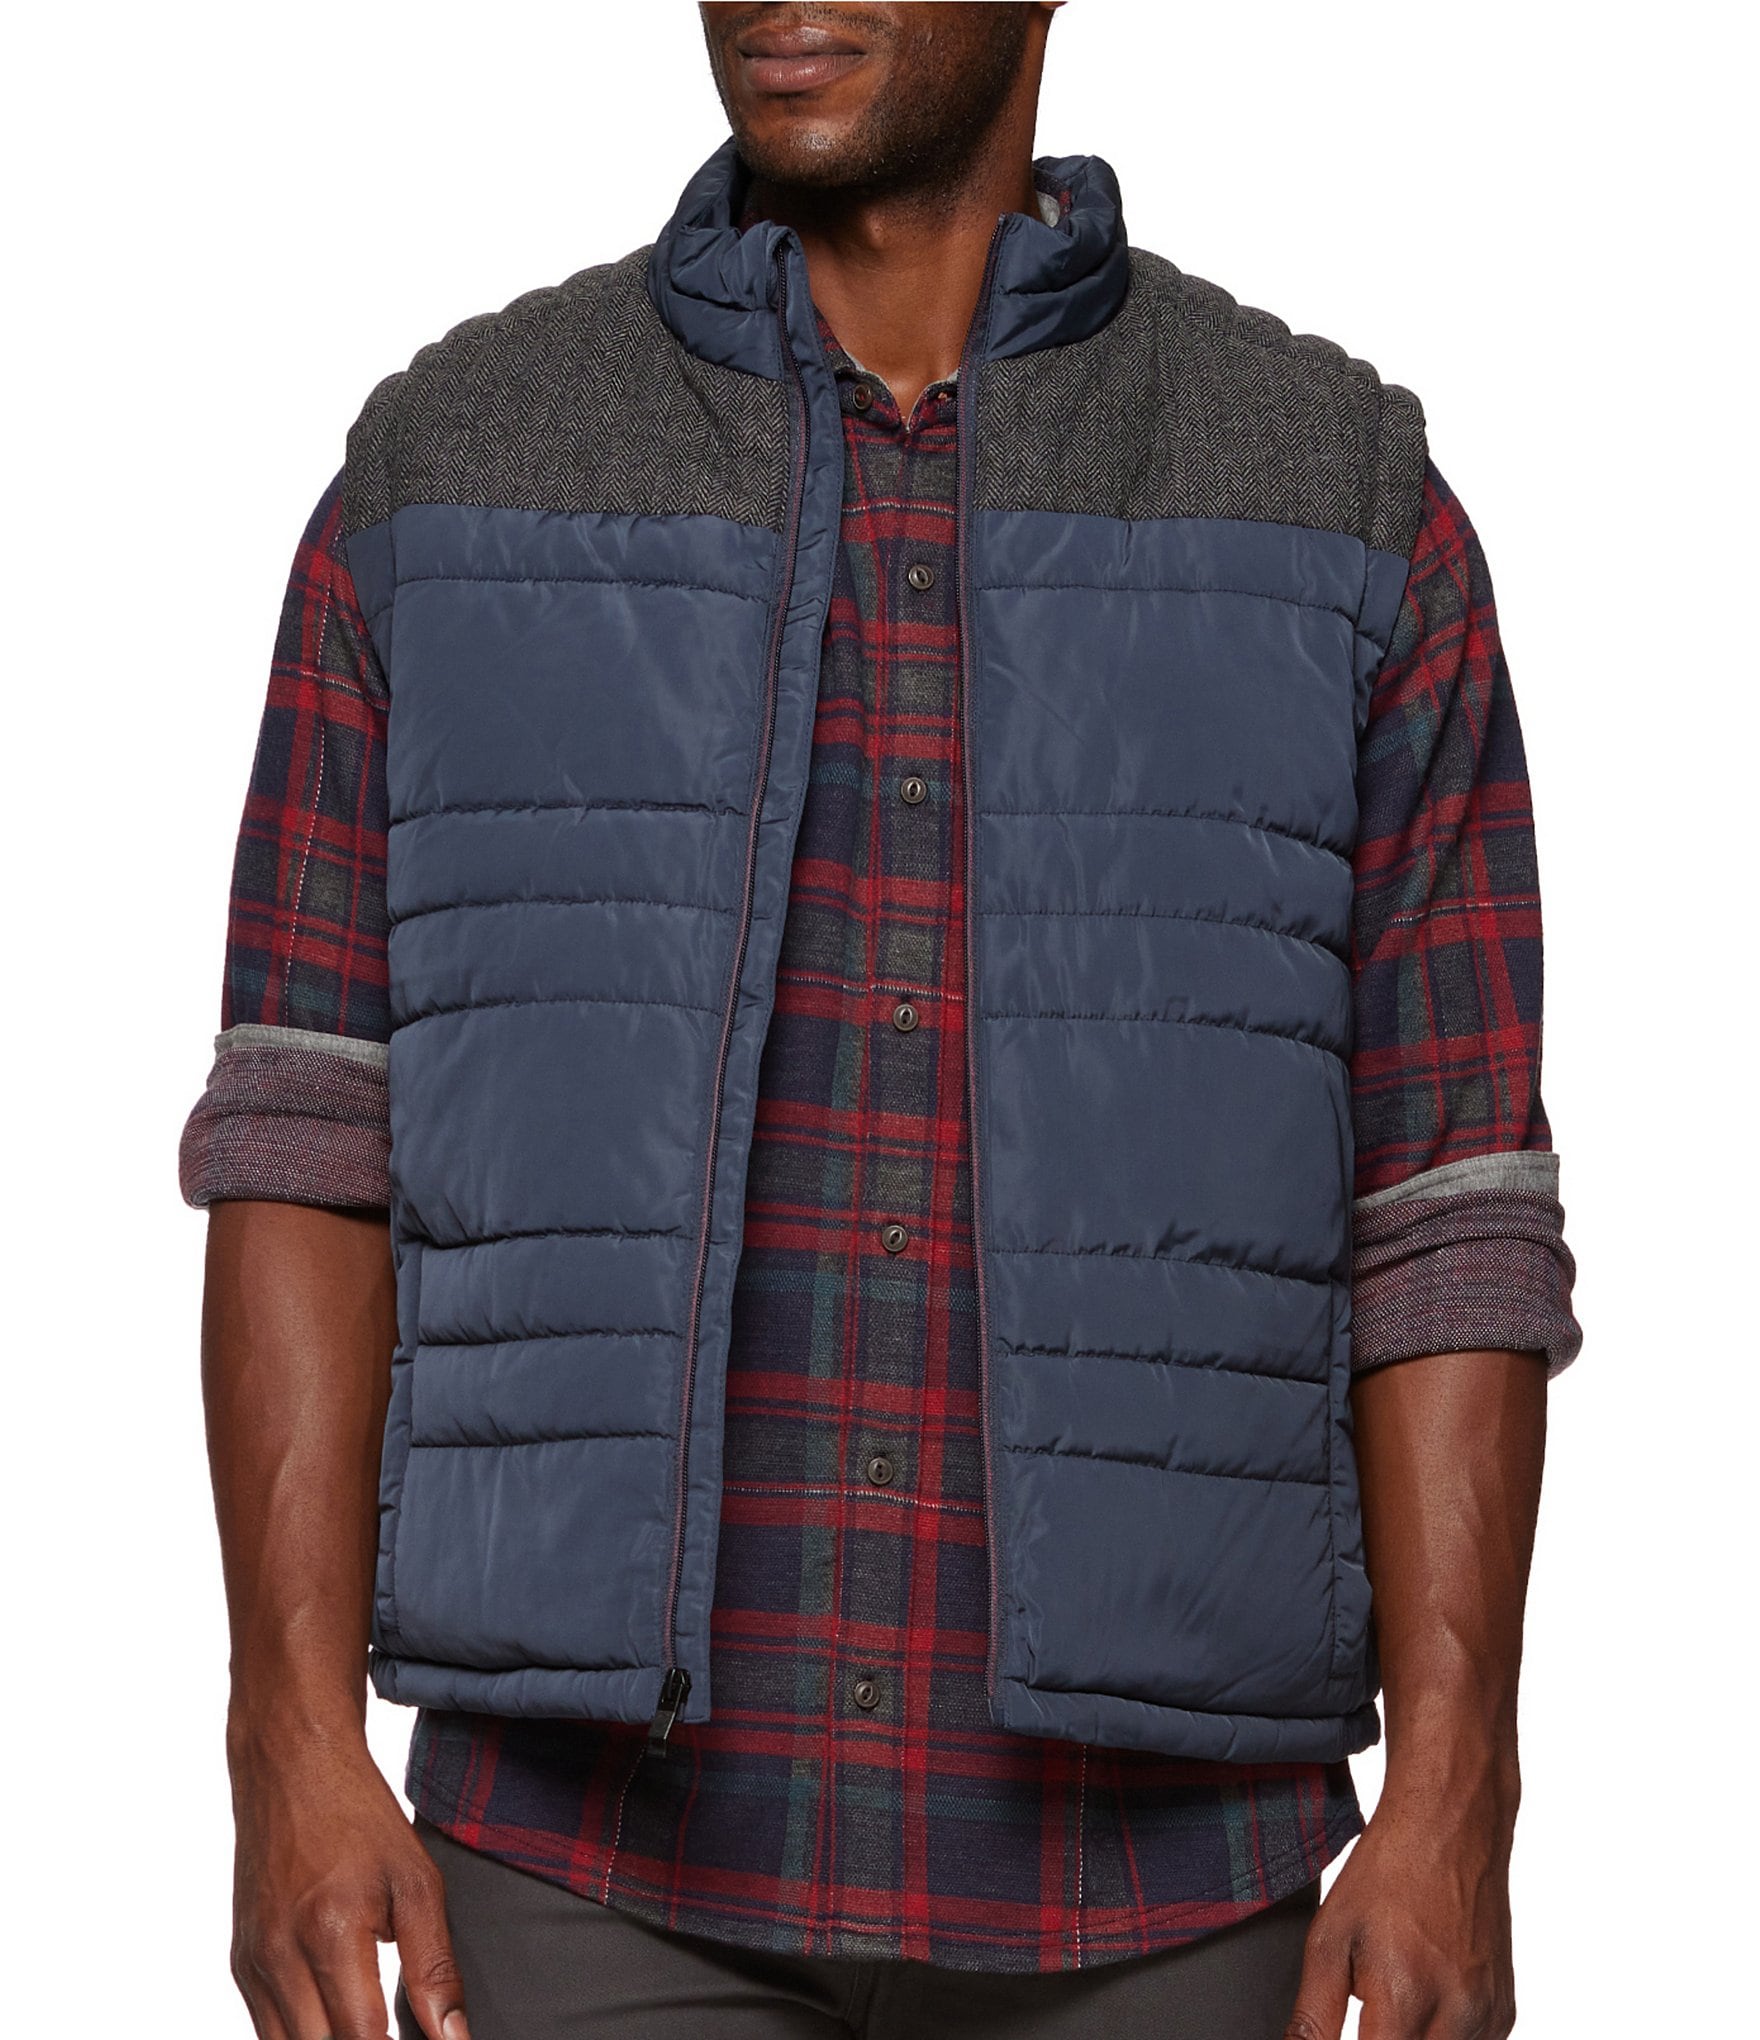 Men's Outerwear, Fall & Winter Vests